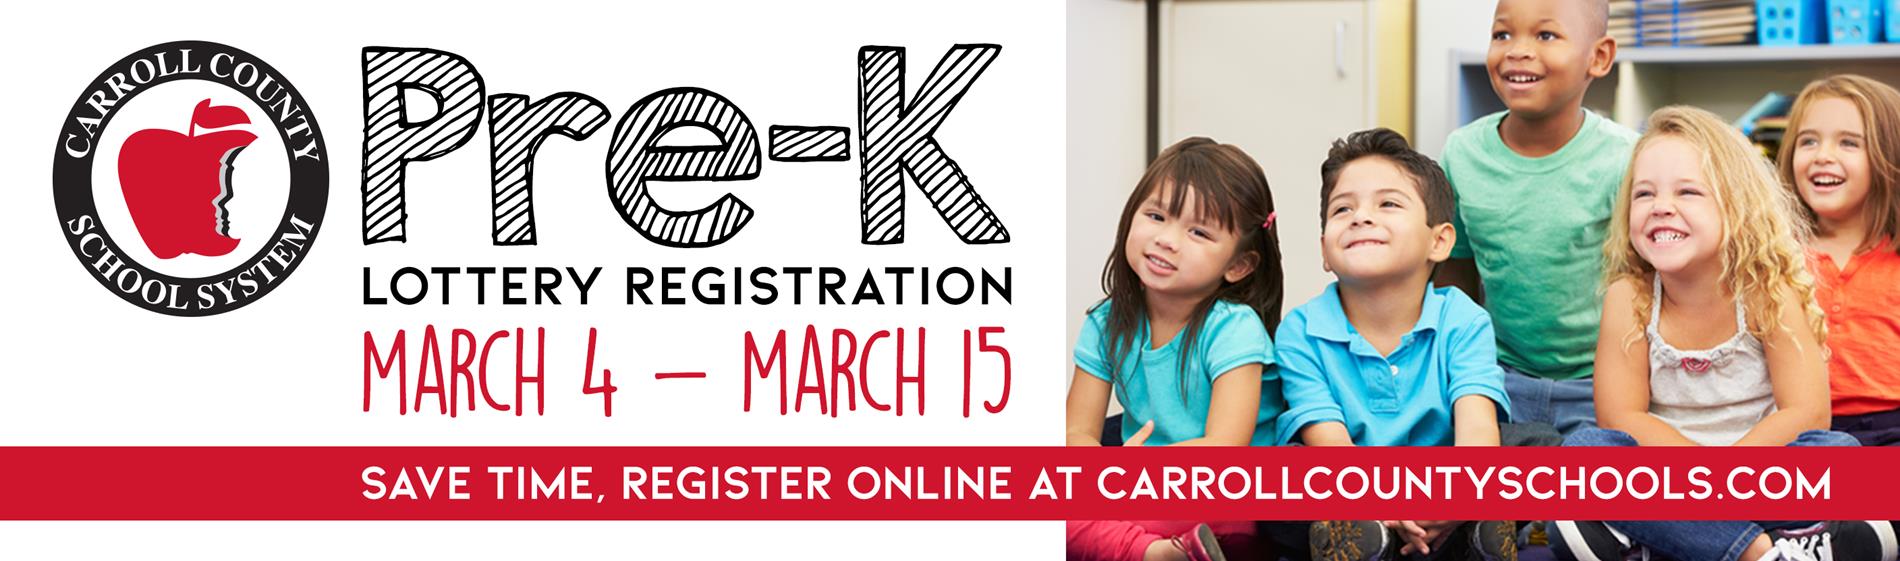 pre k registration march 4-15